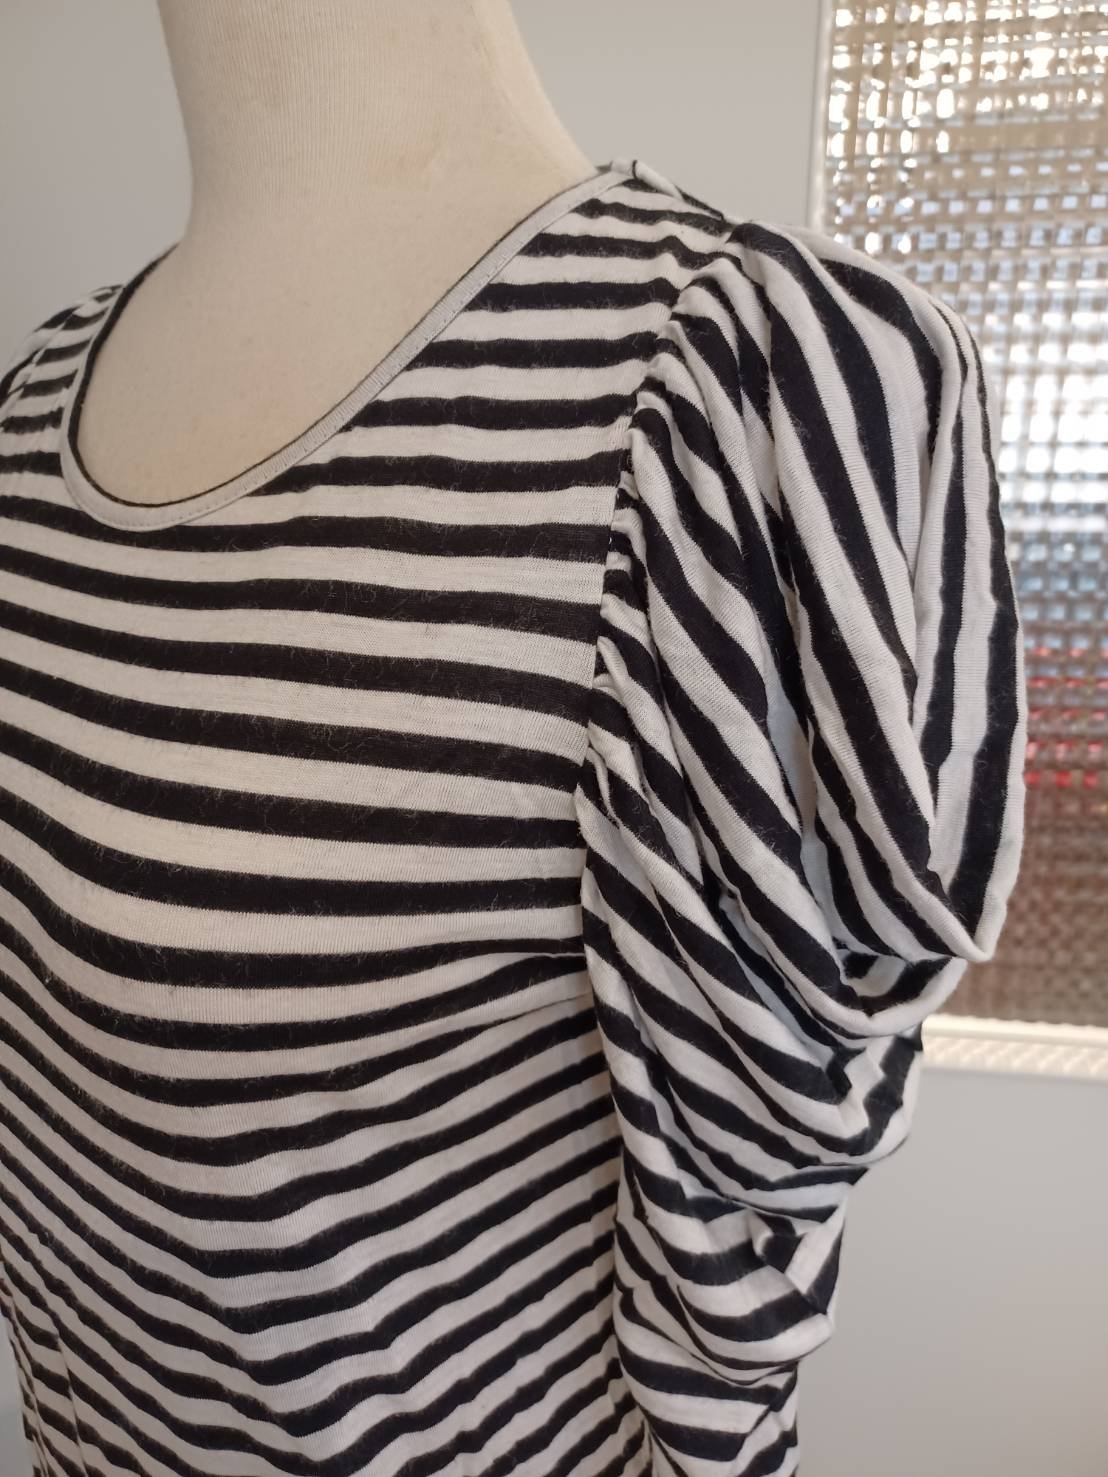 JEANASIS  ♥日本品牌♥ 黑白條紋拼接  公主袖壓褶造型  長袖上衣  下殺價990元 (不議價)